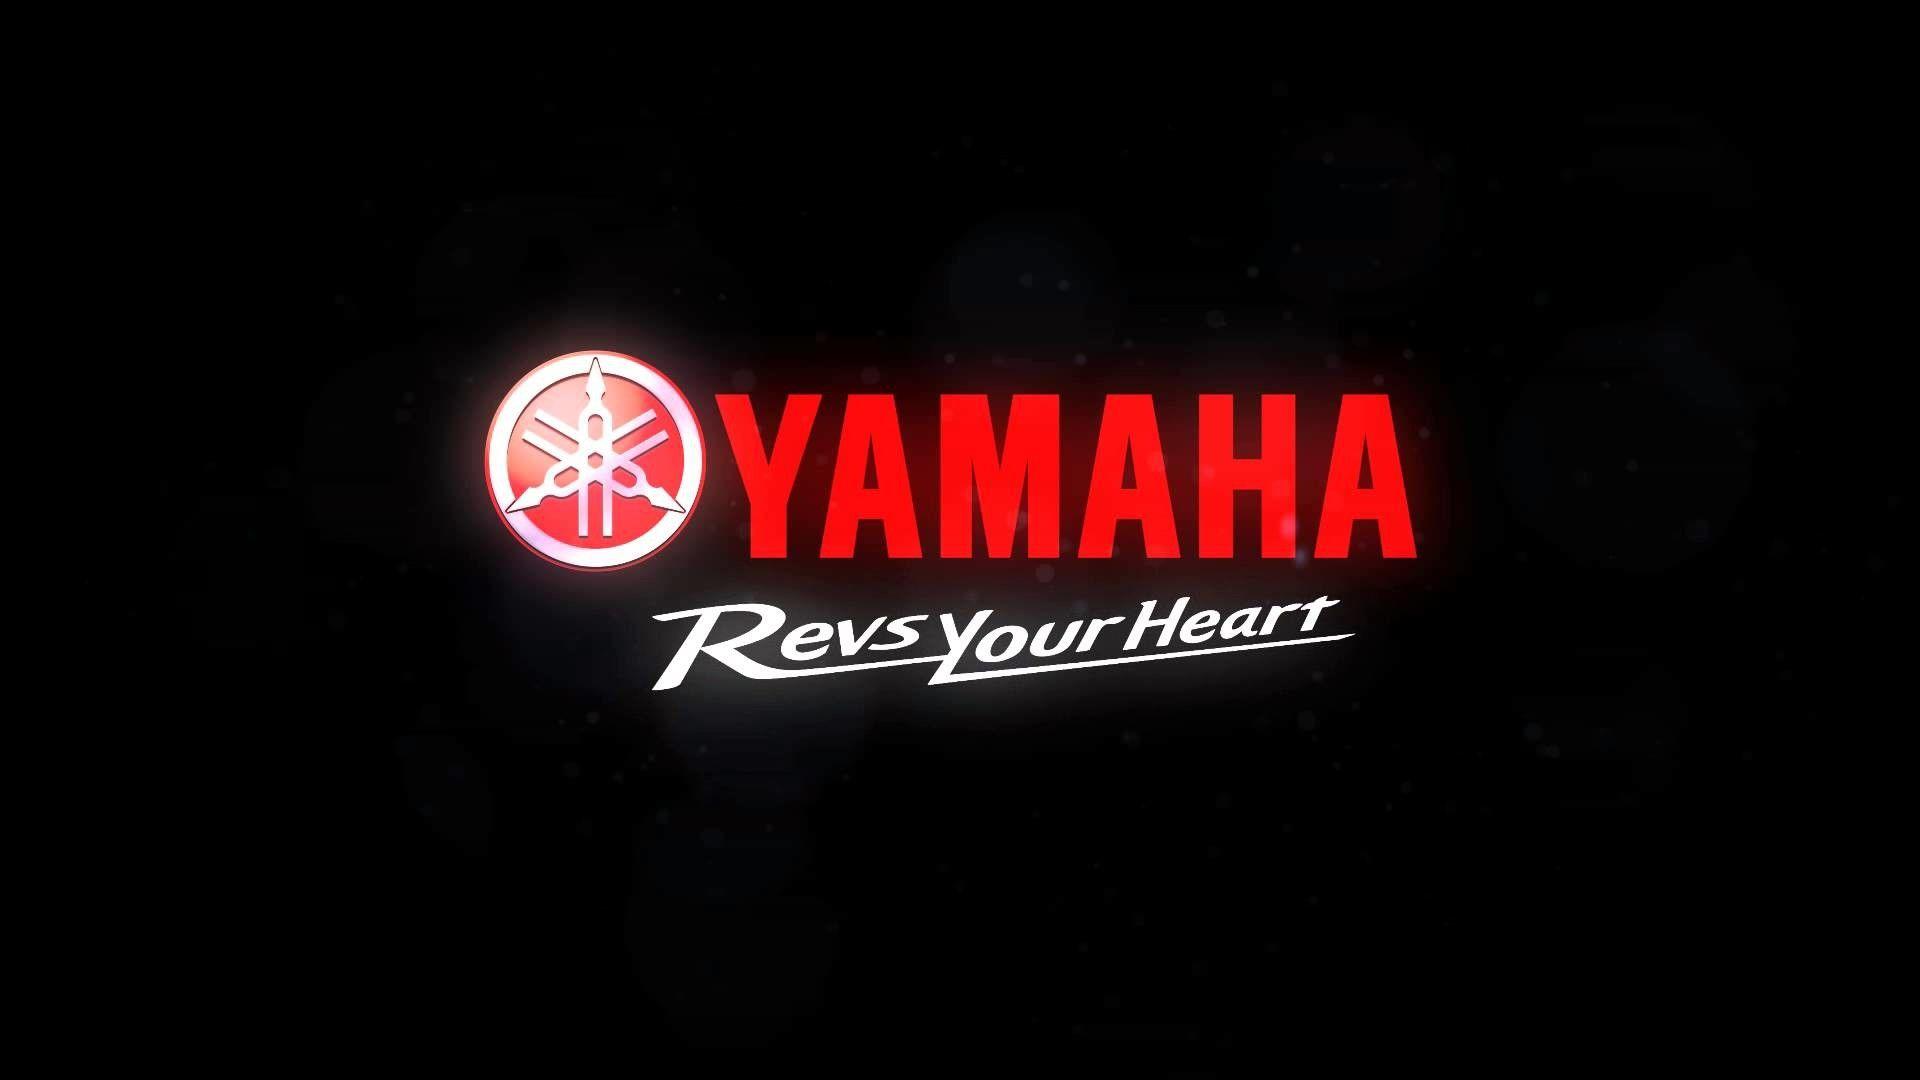 Yamaha Logo Image. Beautiful image HD Picture & Desktop Wallpaper